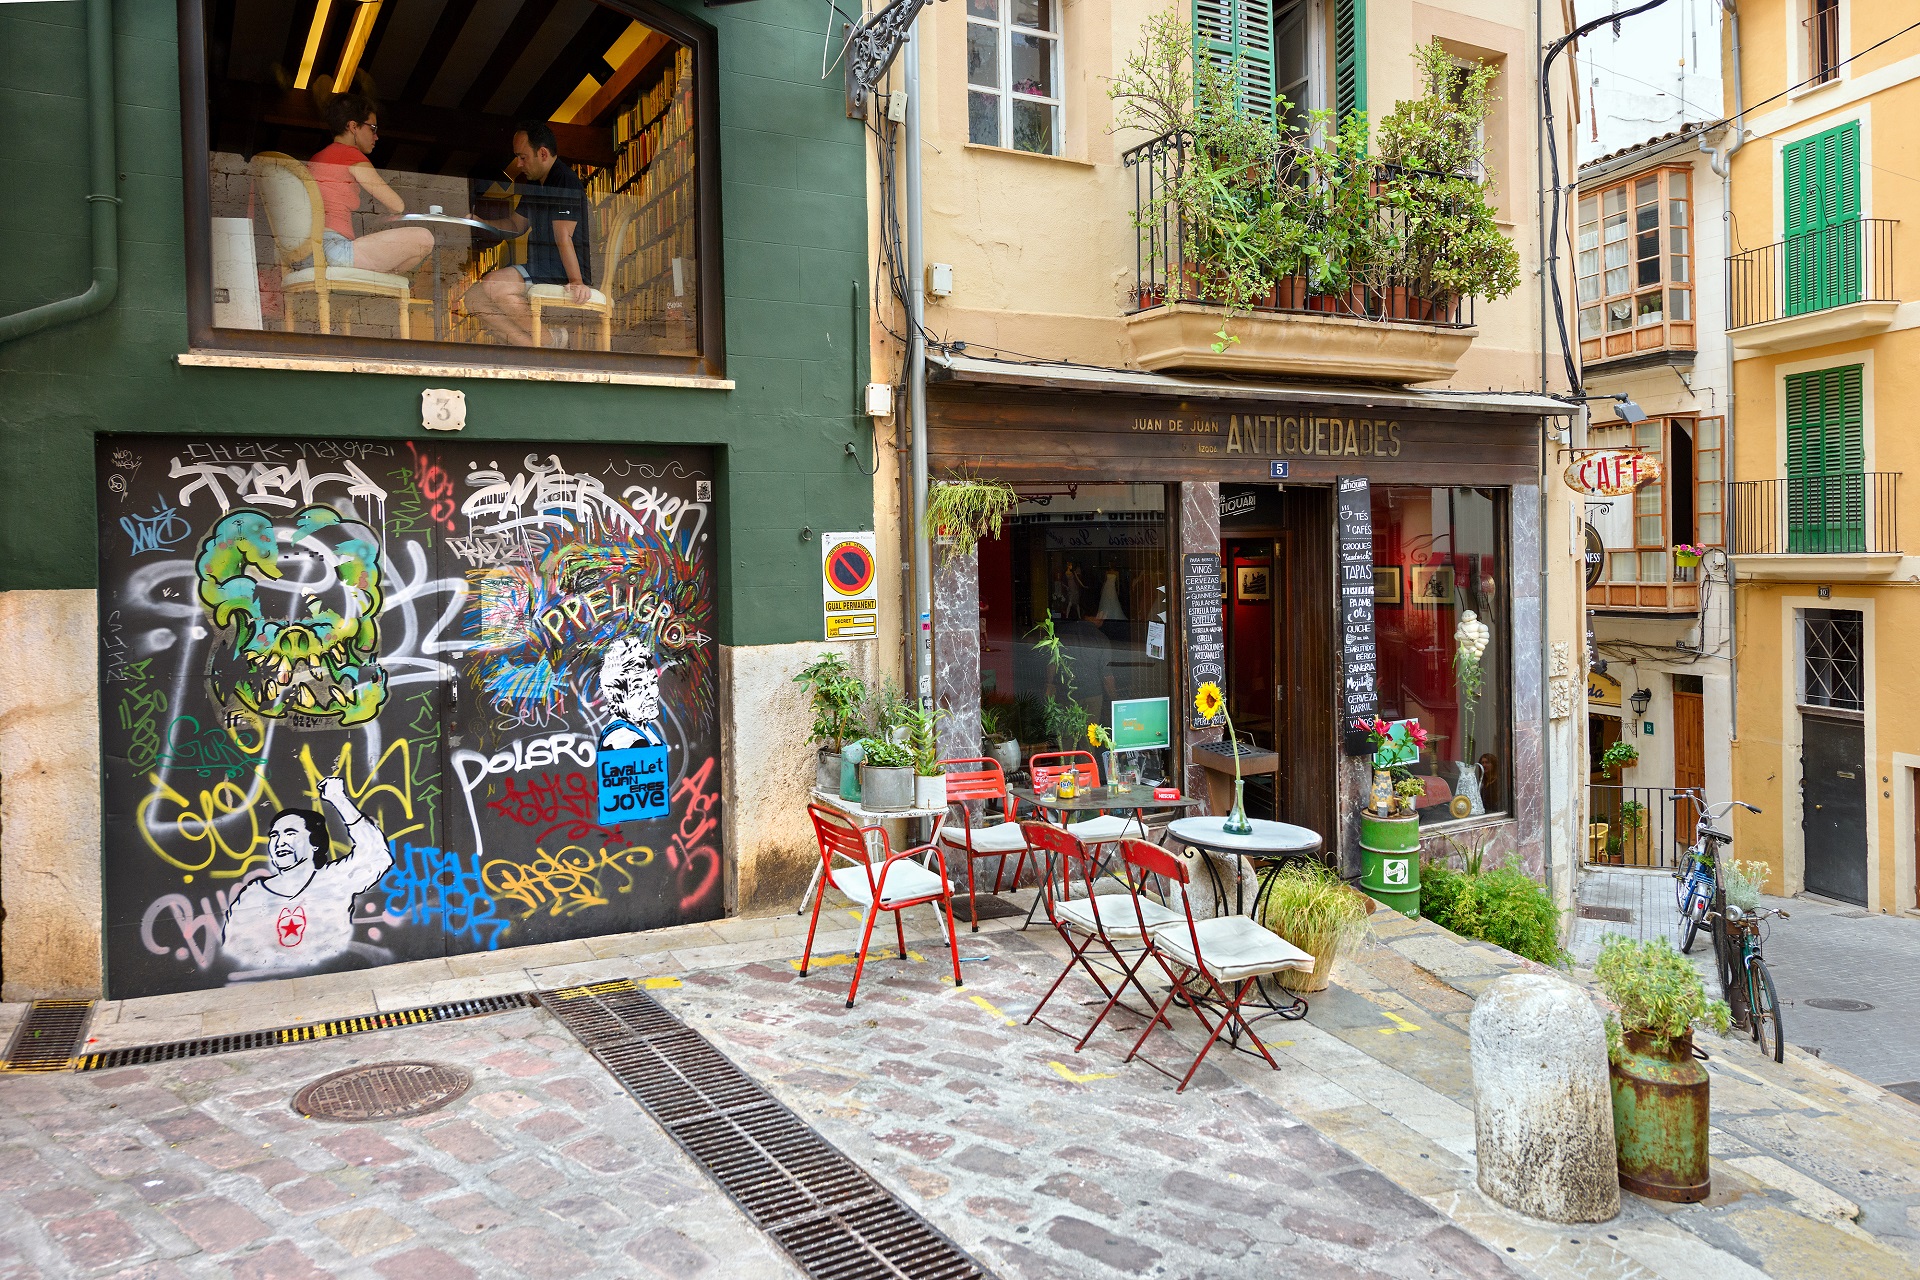 Ein kleines Café in Santa Catalina, einem urbanen Szeneviertel in Palma de Mallorca.